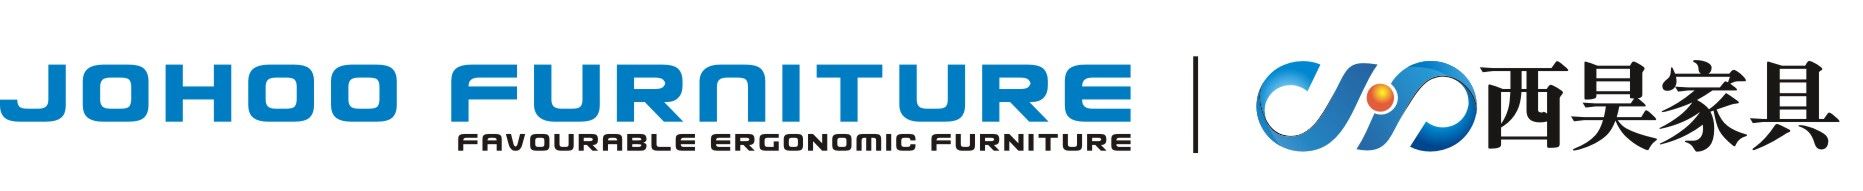 Johoo Furnitures Logo